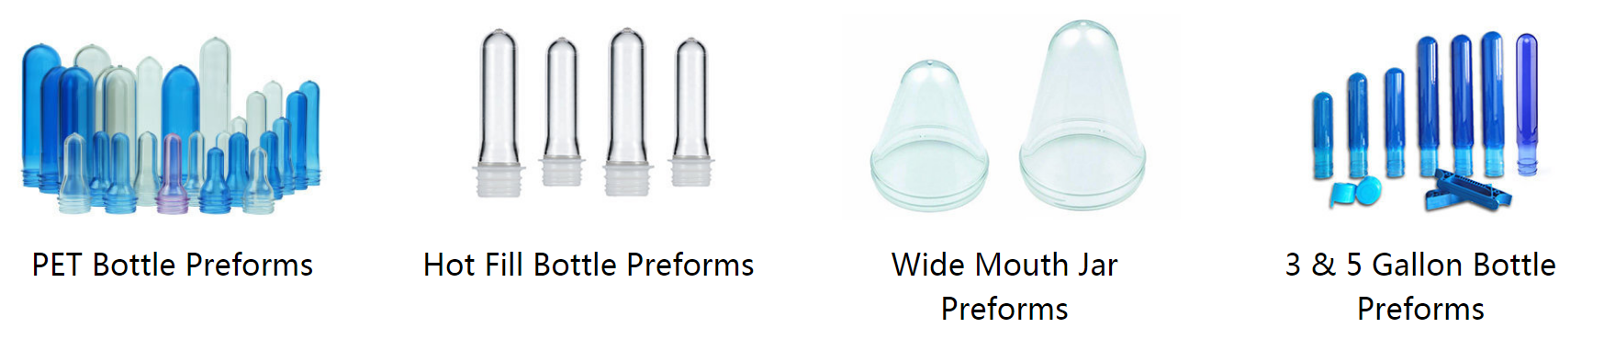 various types of pet bottle preform